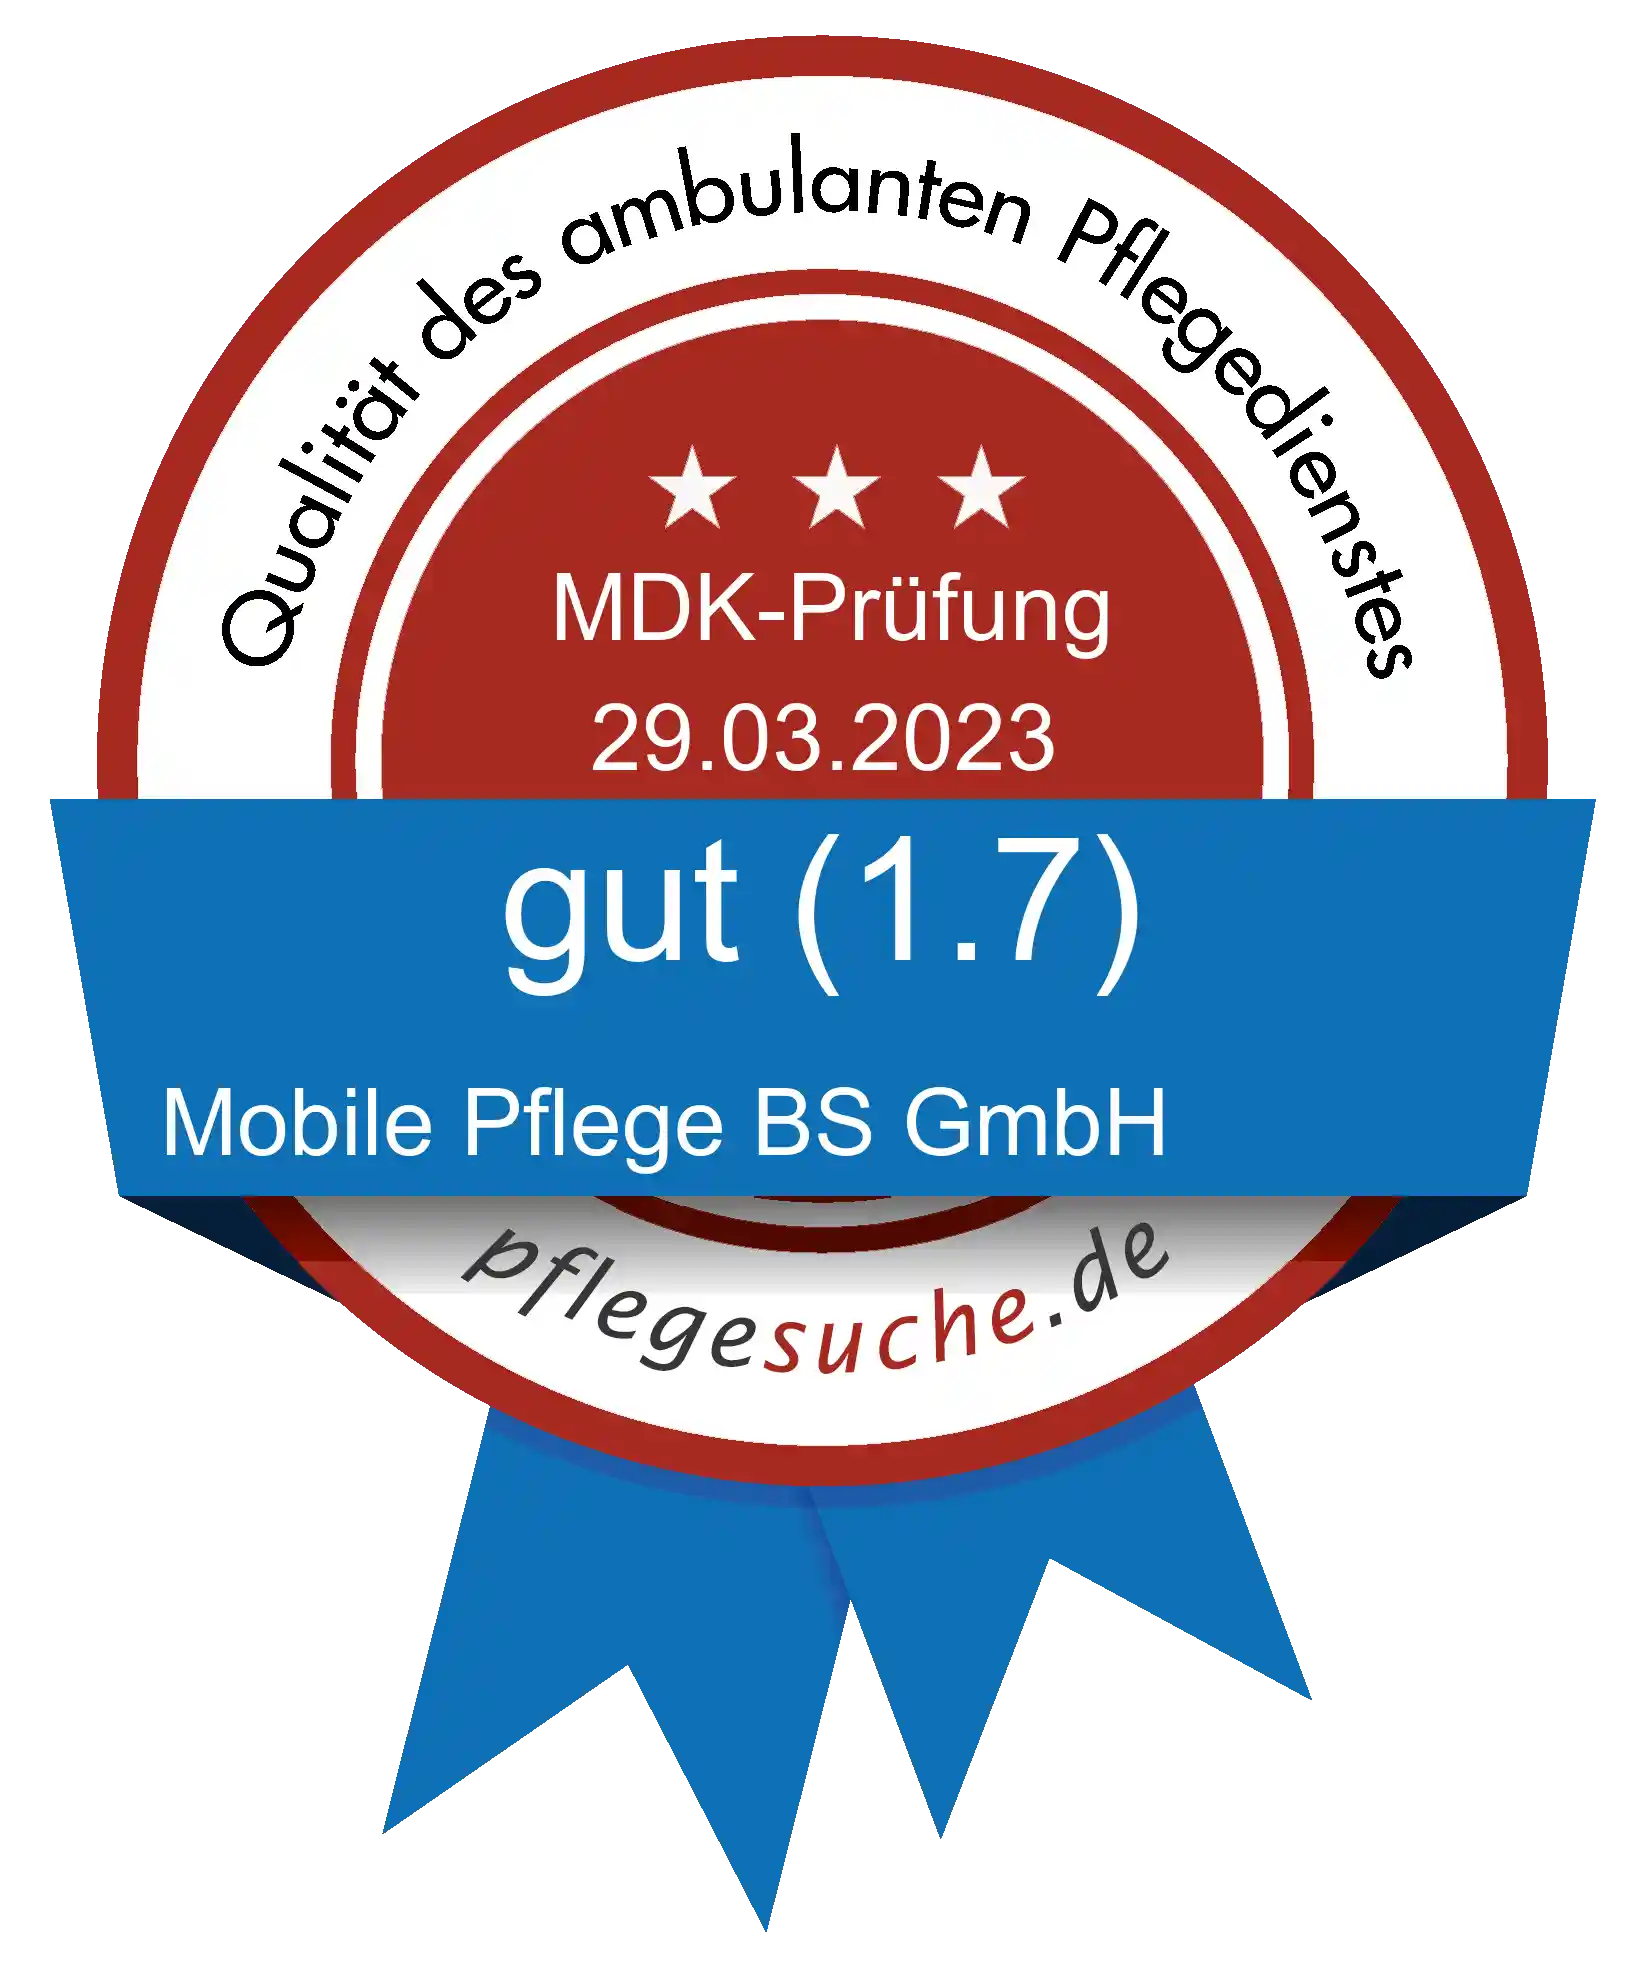 Siegel Benotung: Mobile Pflege BS GmbH